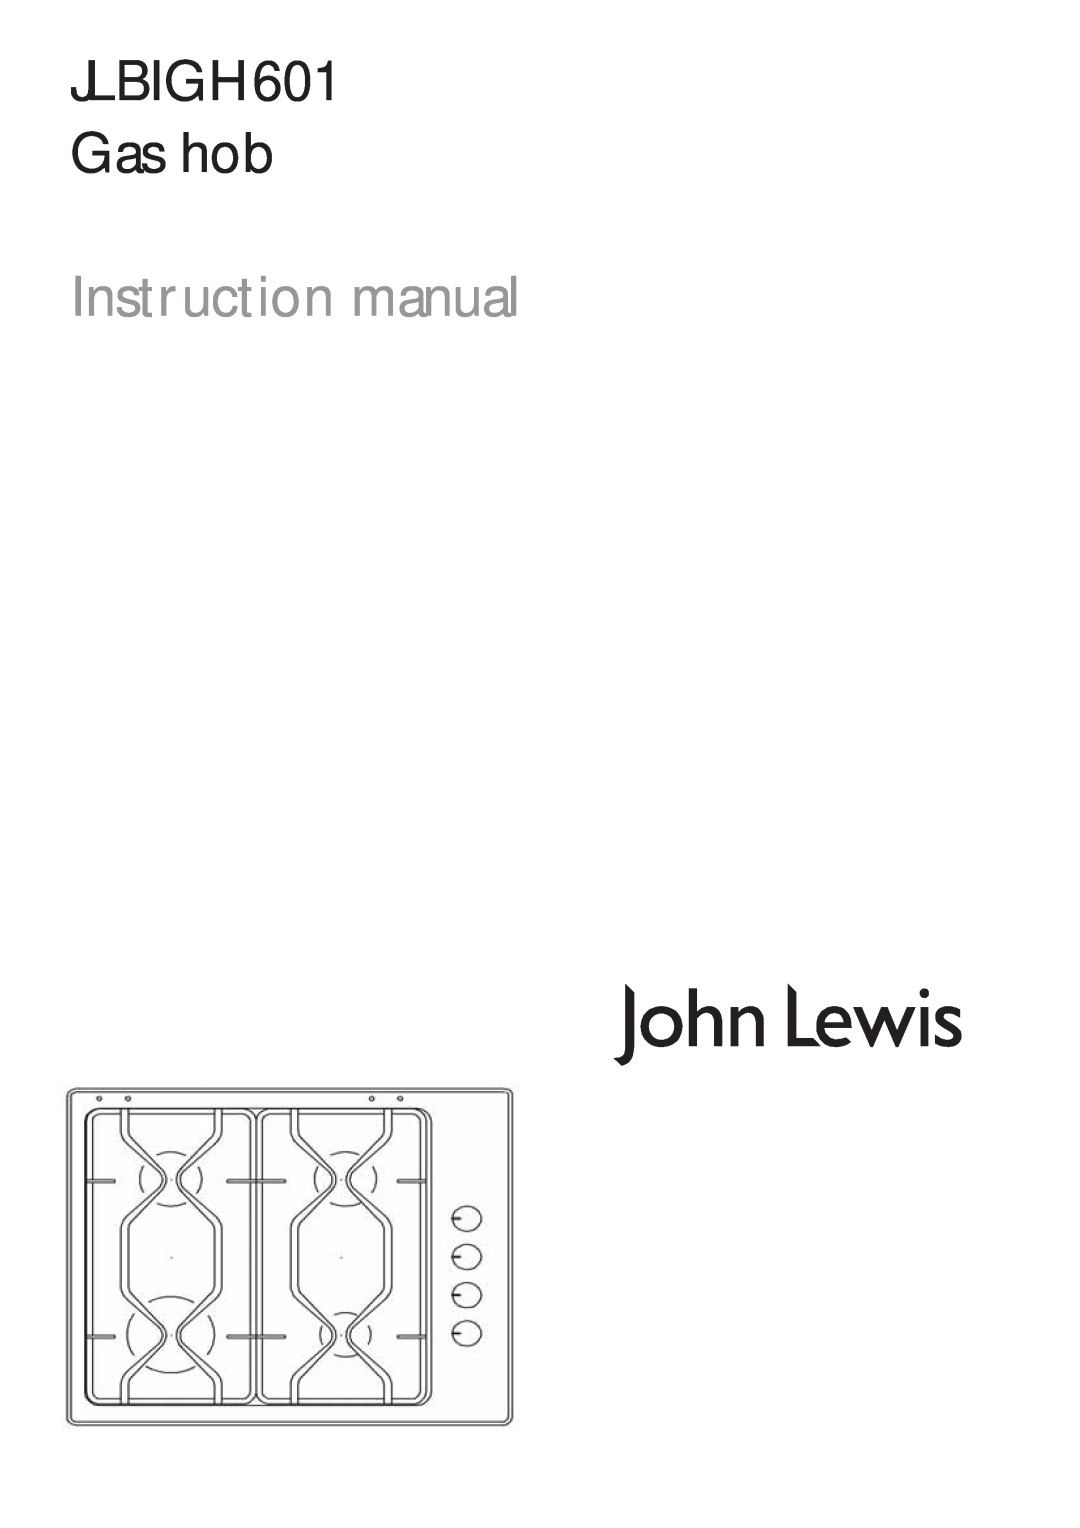 John Lewis instruction manual JLBIGH601 Gas hob 